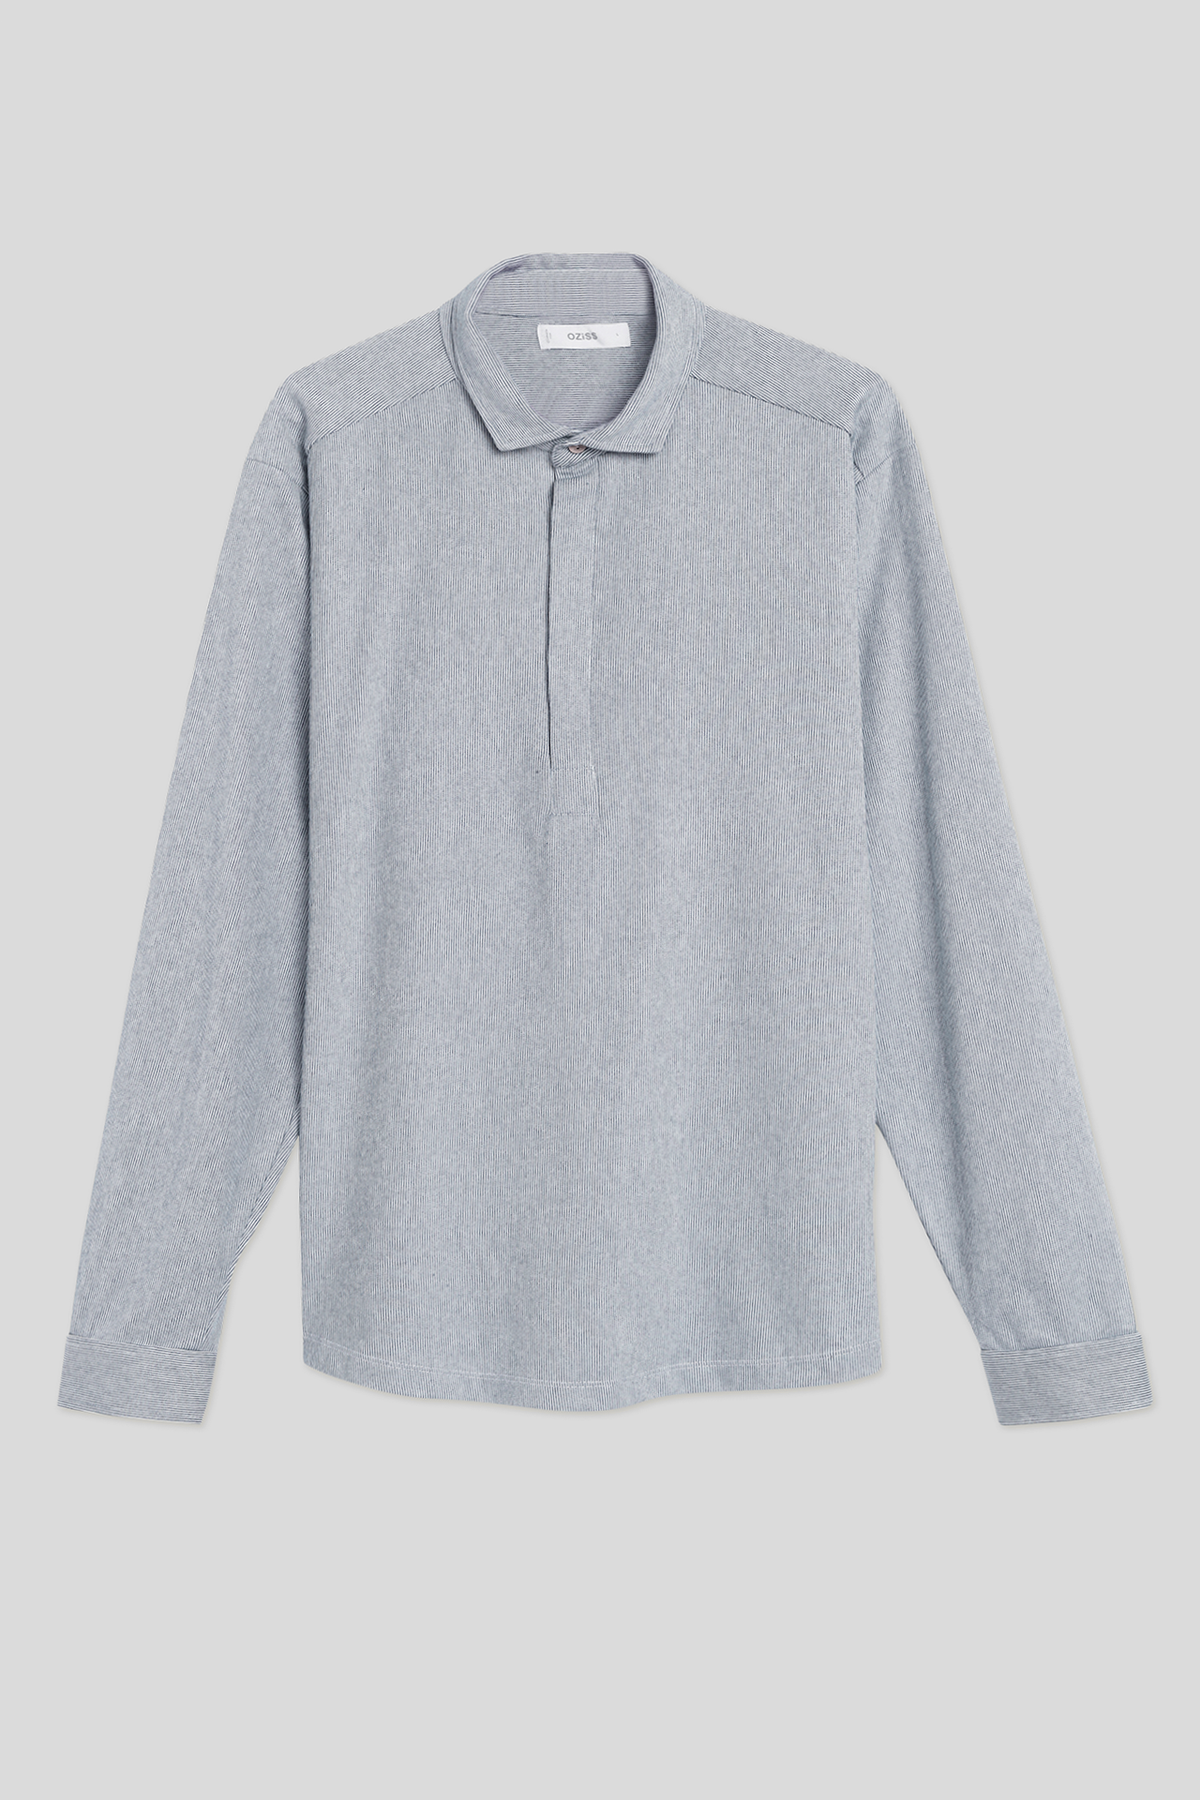 Soft Touch Shirt: Light Blue Stripe – OZiSS